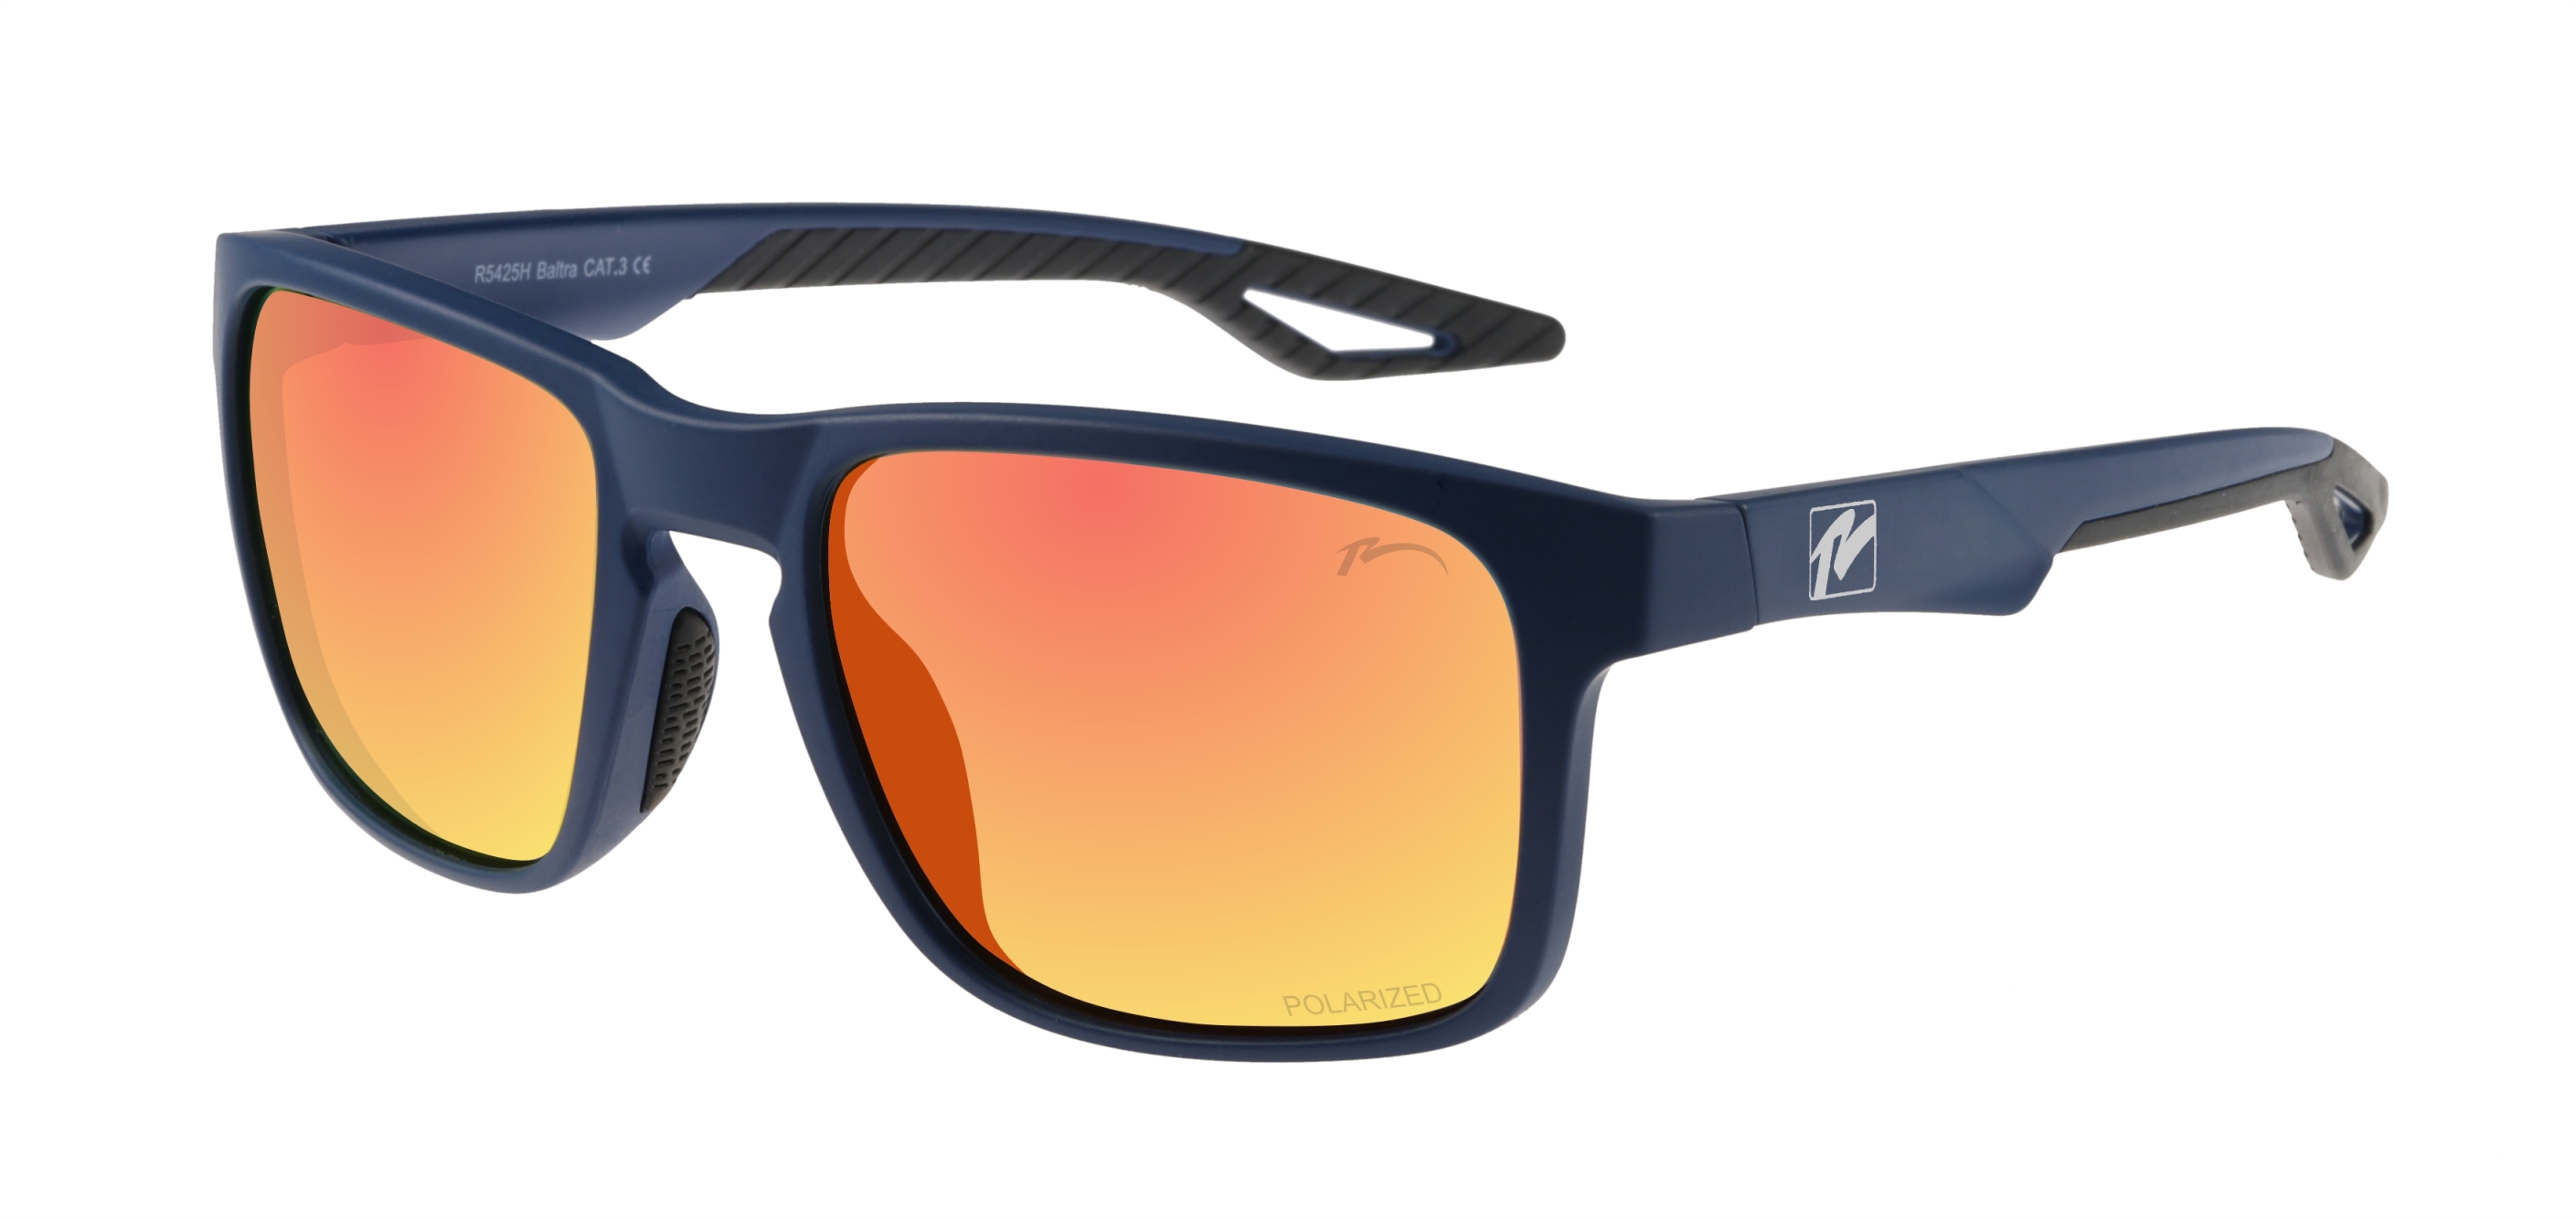 Polarized sport sunglasses  Baltra Relax R5425H standard